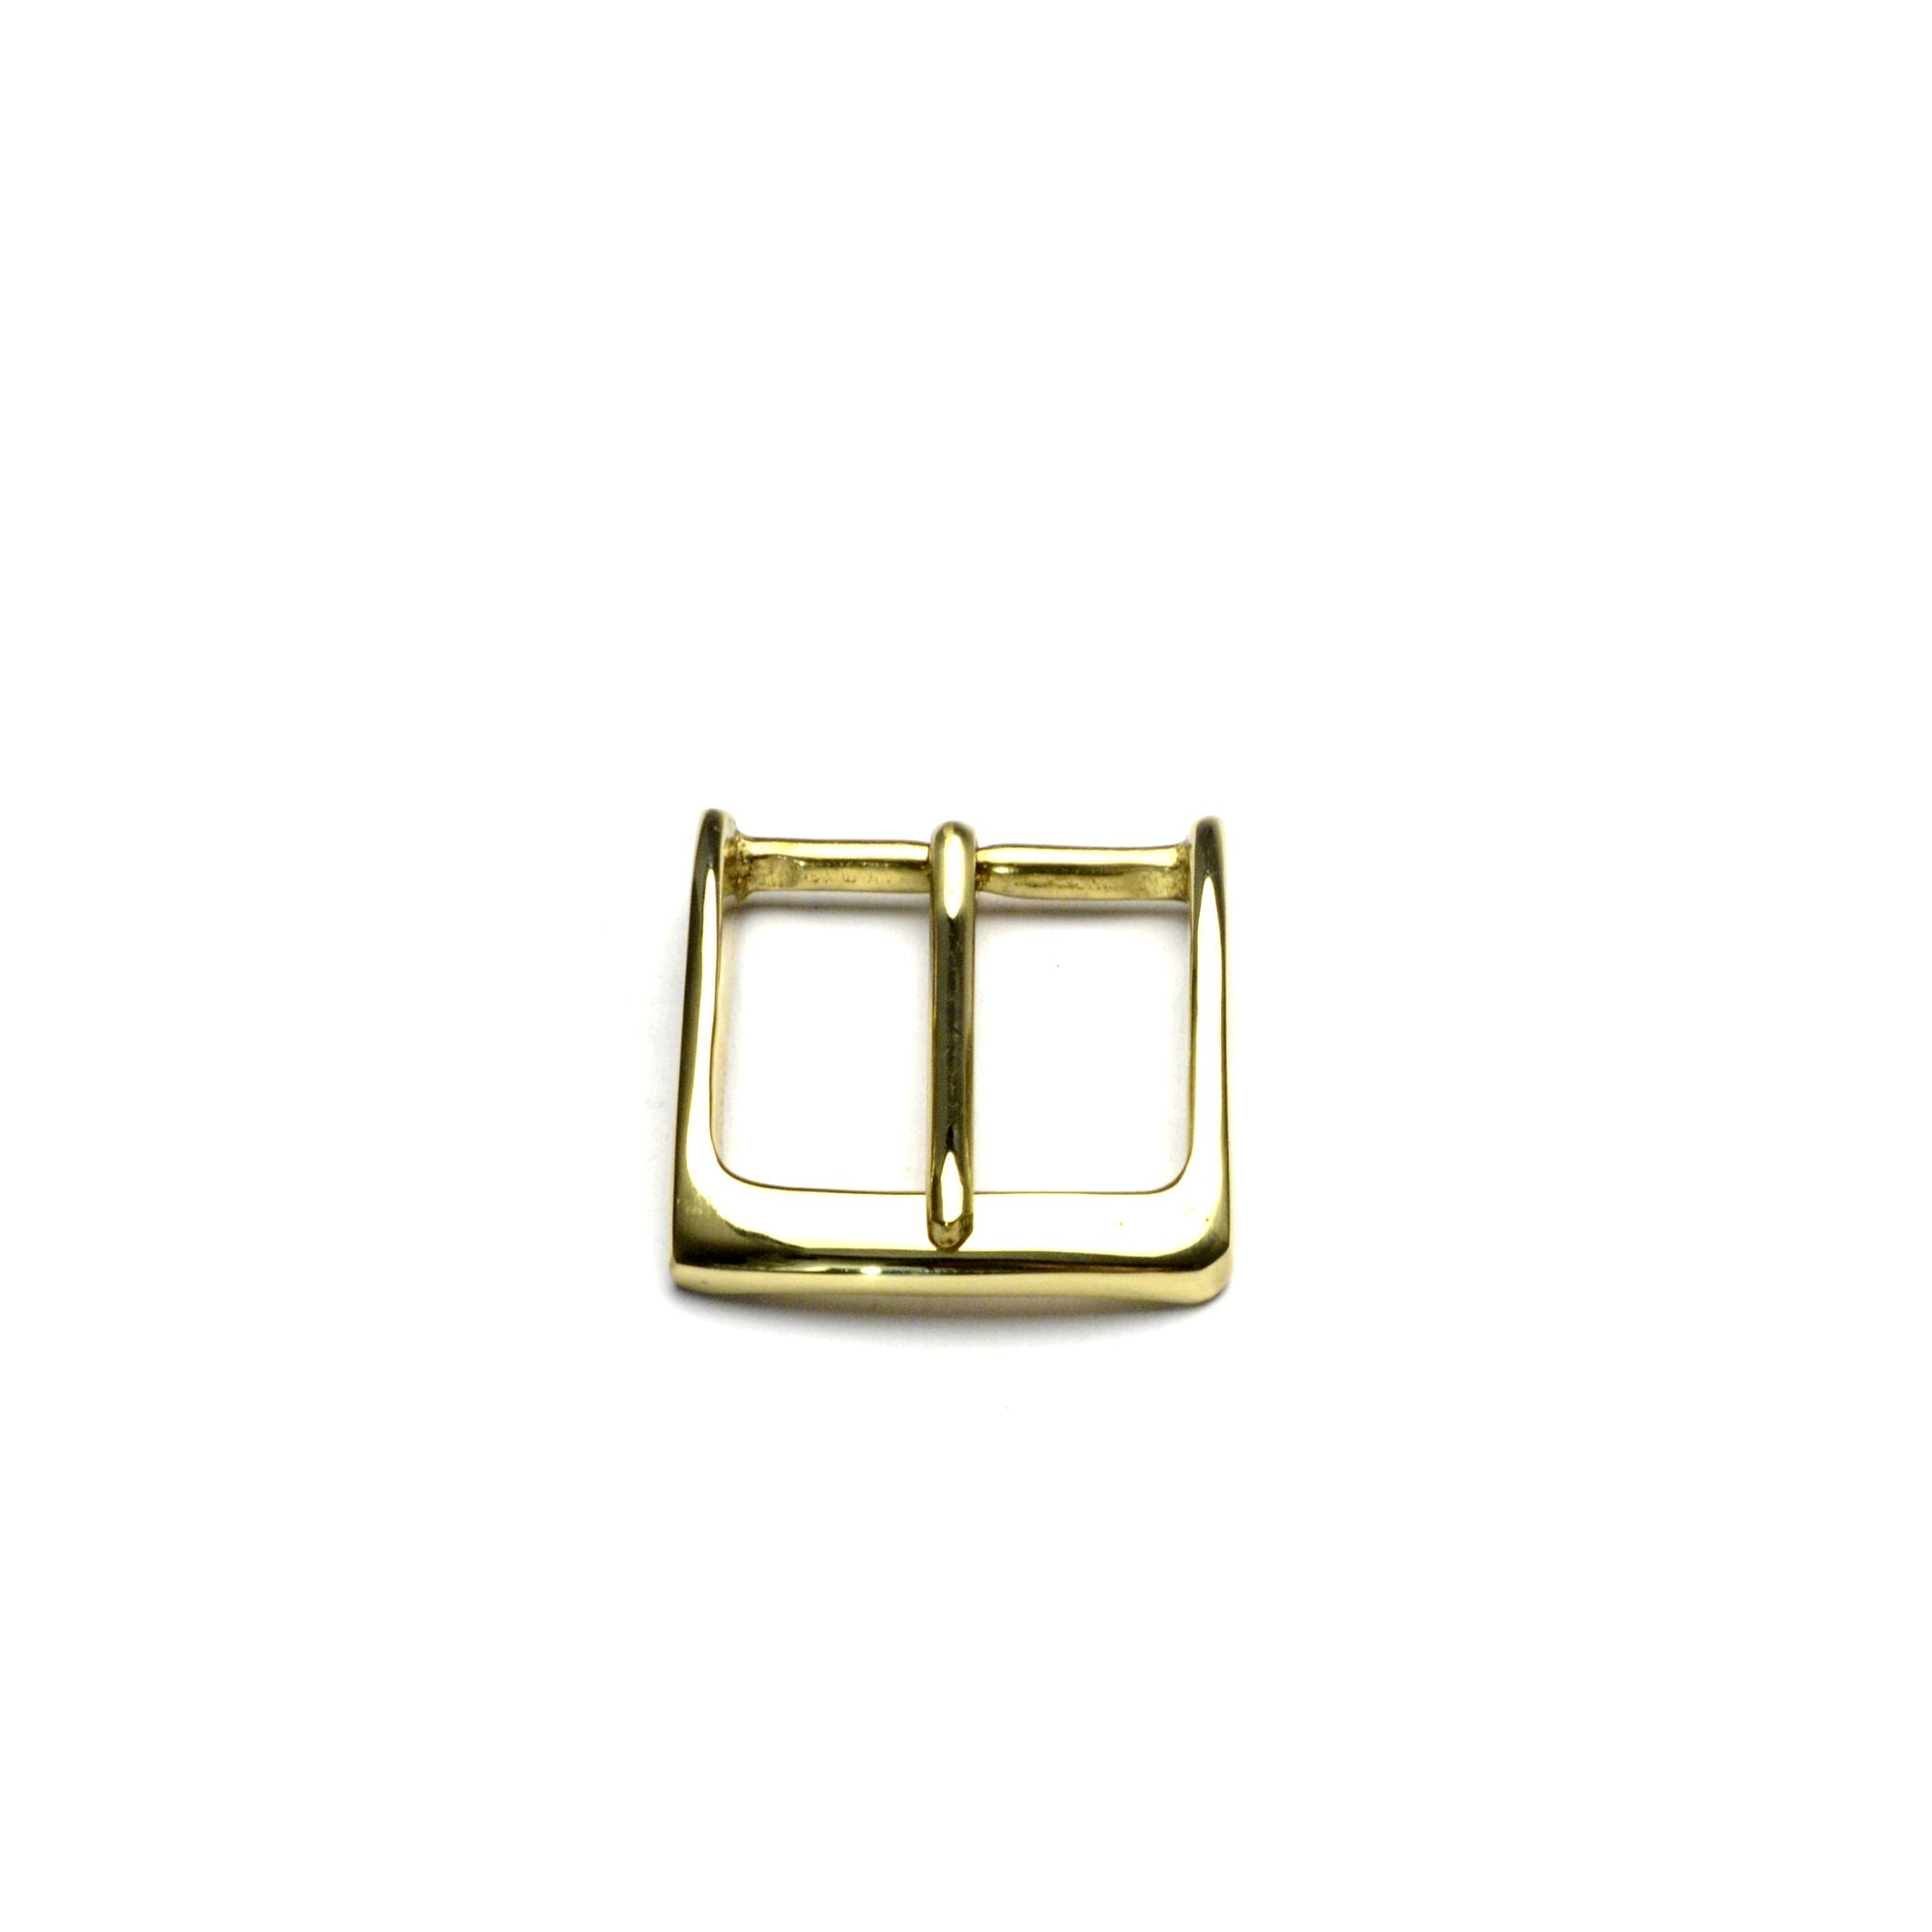 32mm Solid Brass Midtown Brass Belt Buckle from Identity Leathercraft